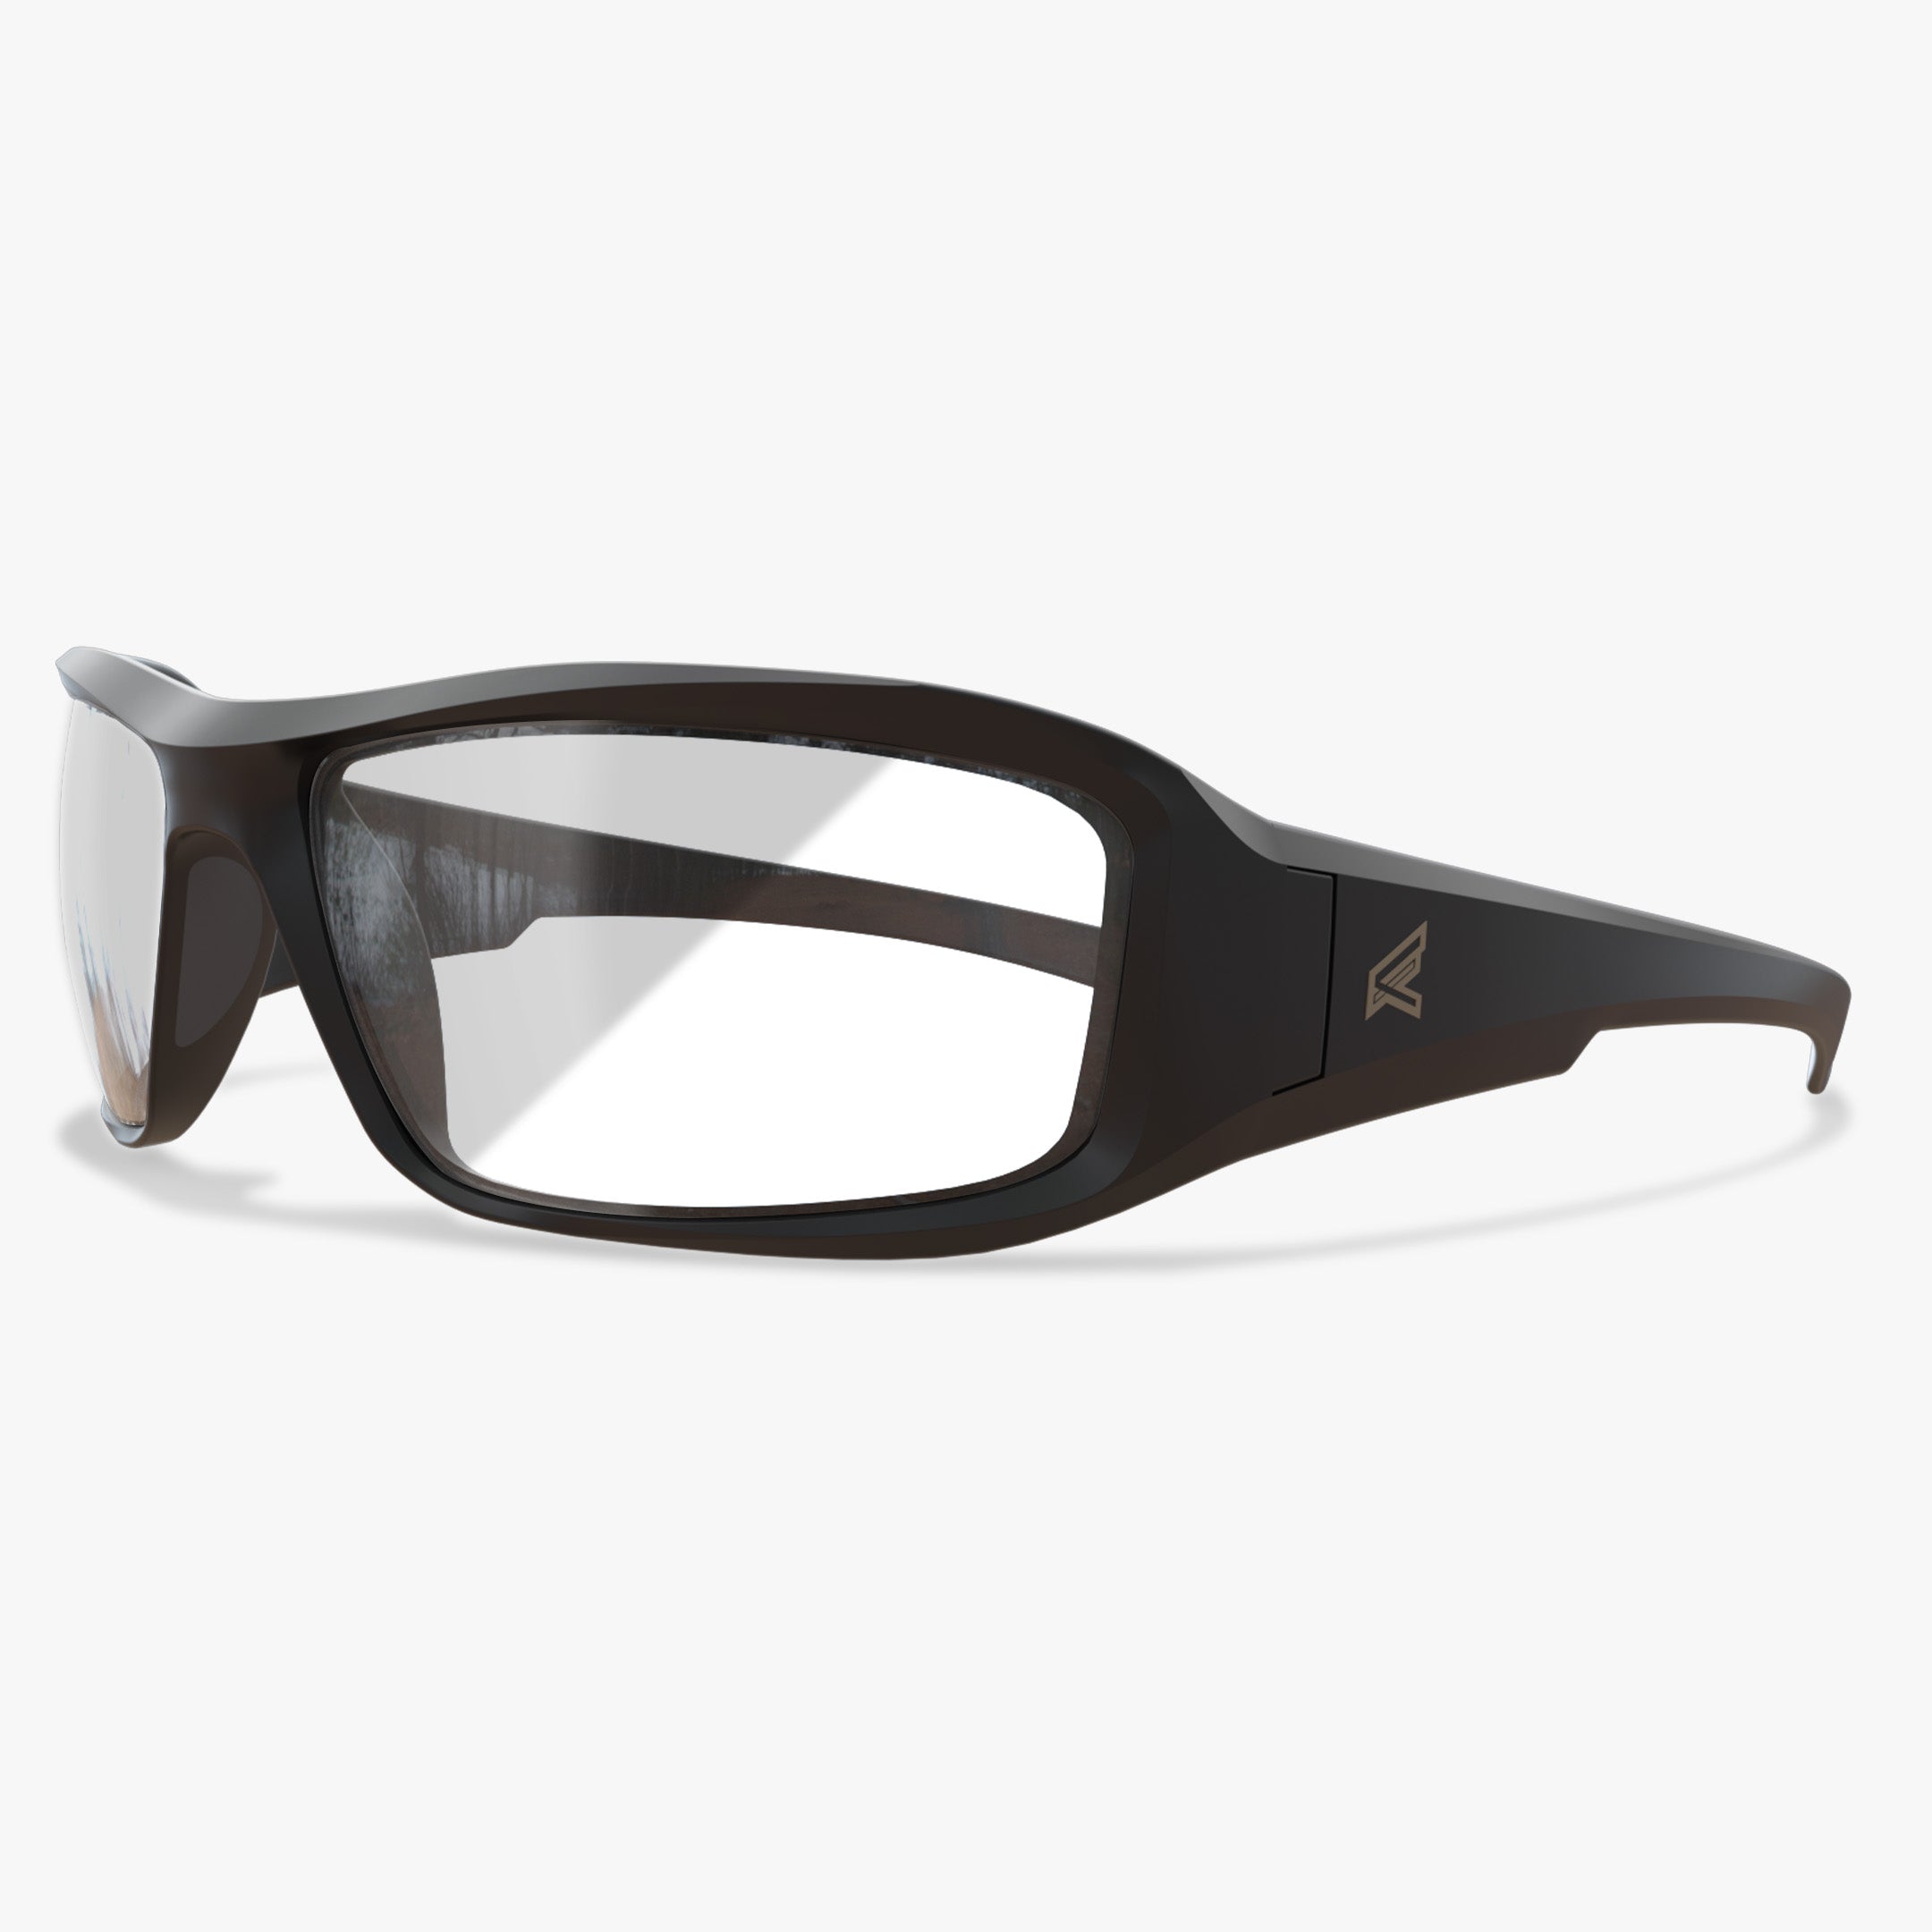 Shooting Glasses | Edge Hamel | ANSI Z87.1+ High Velocity Rated